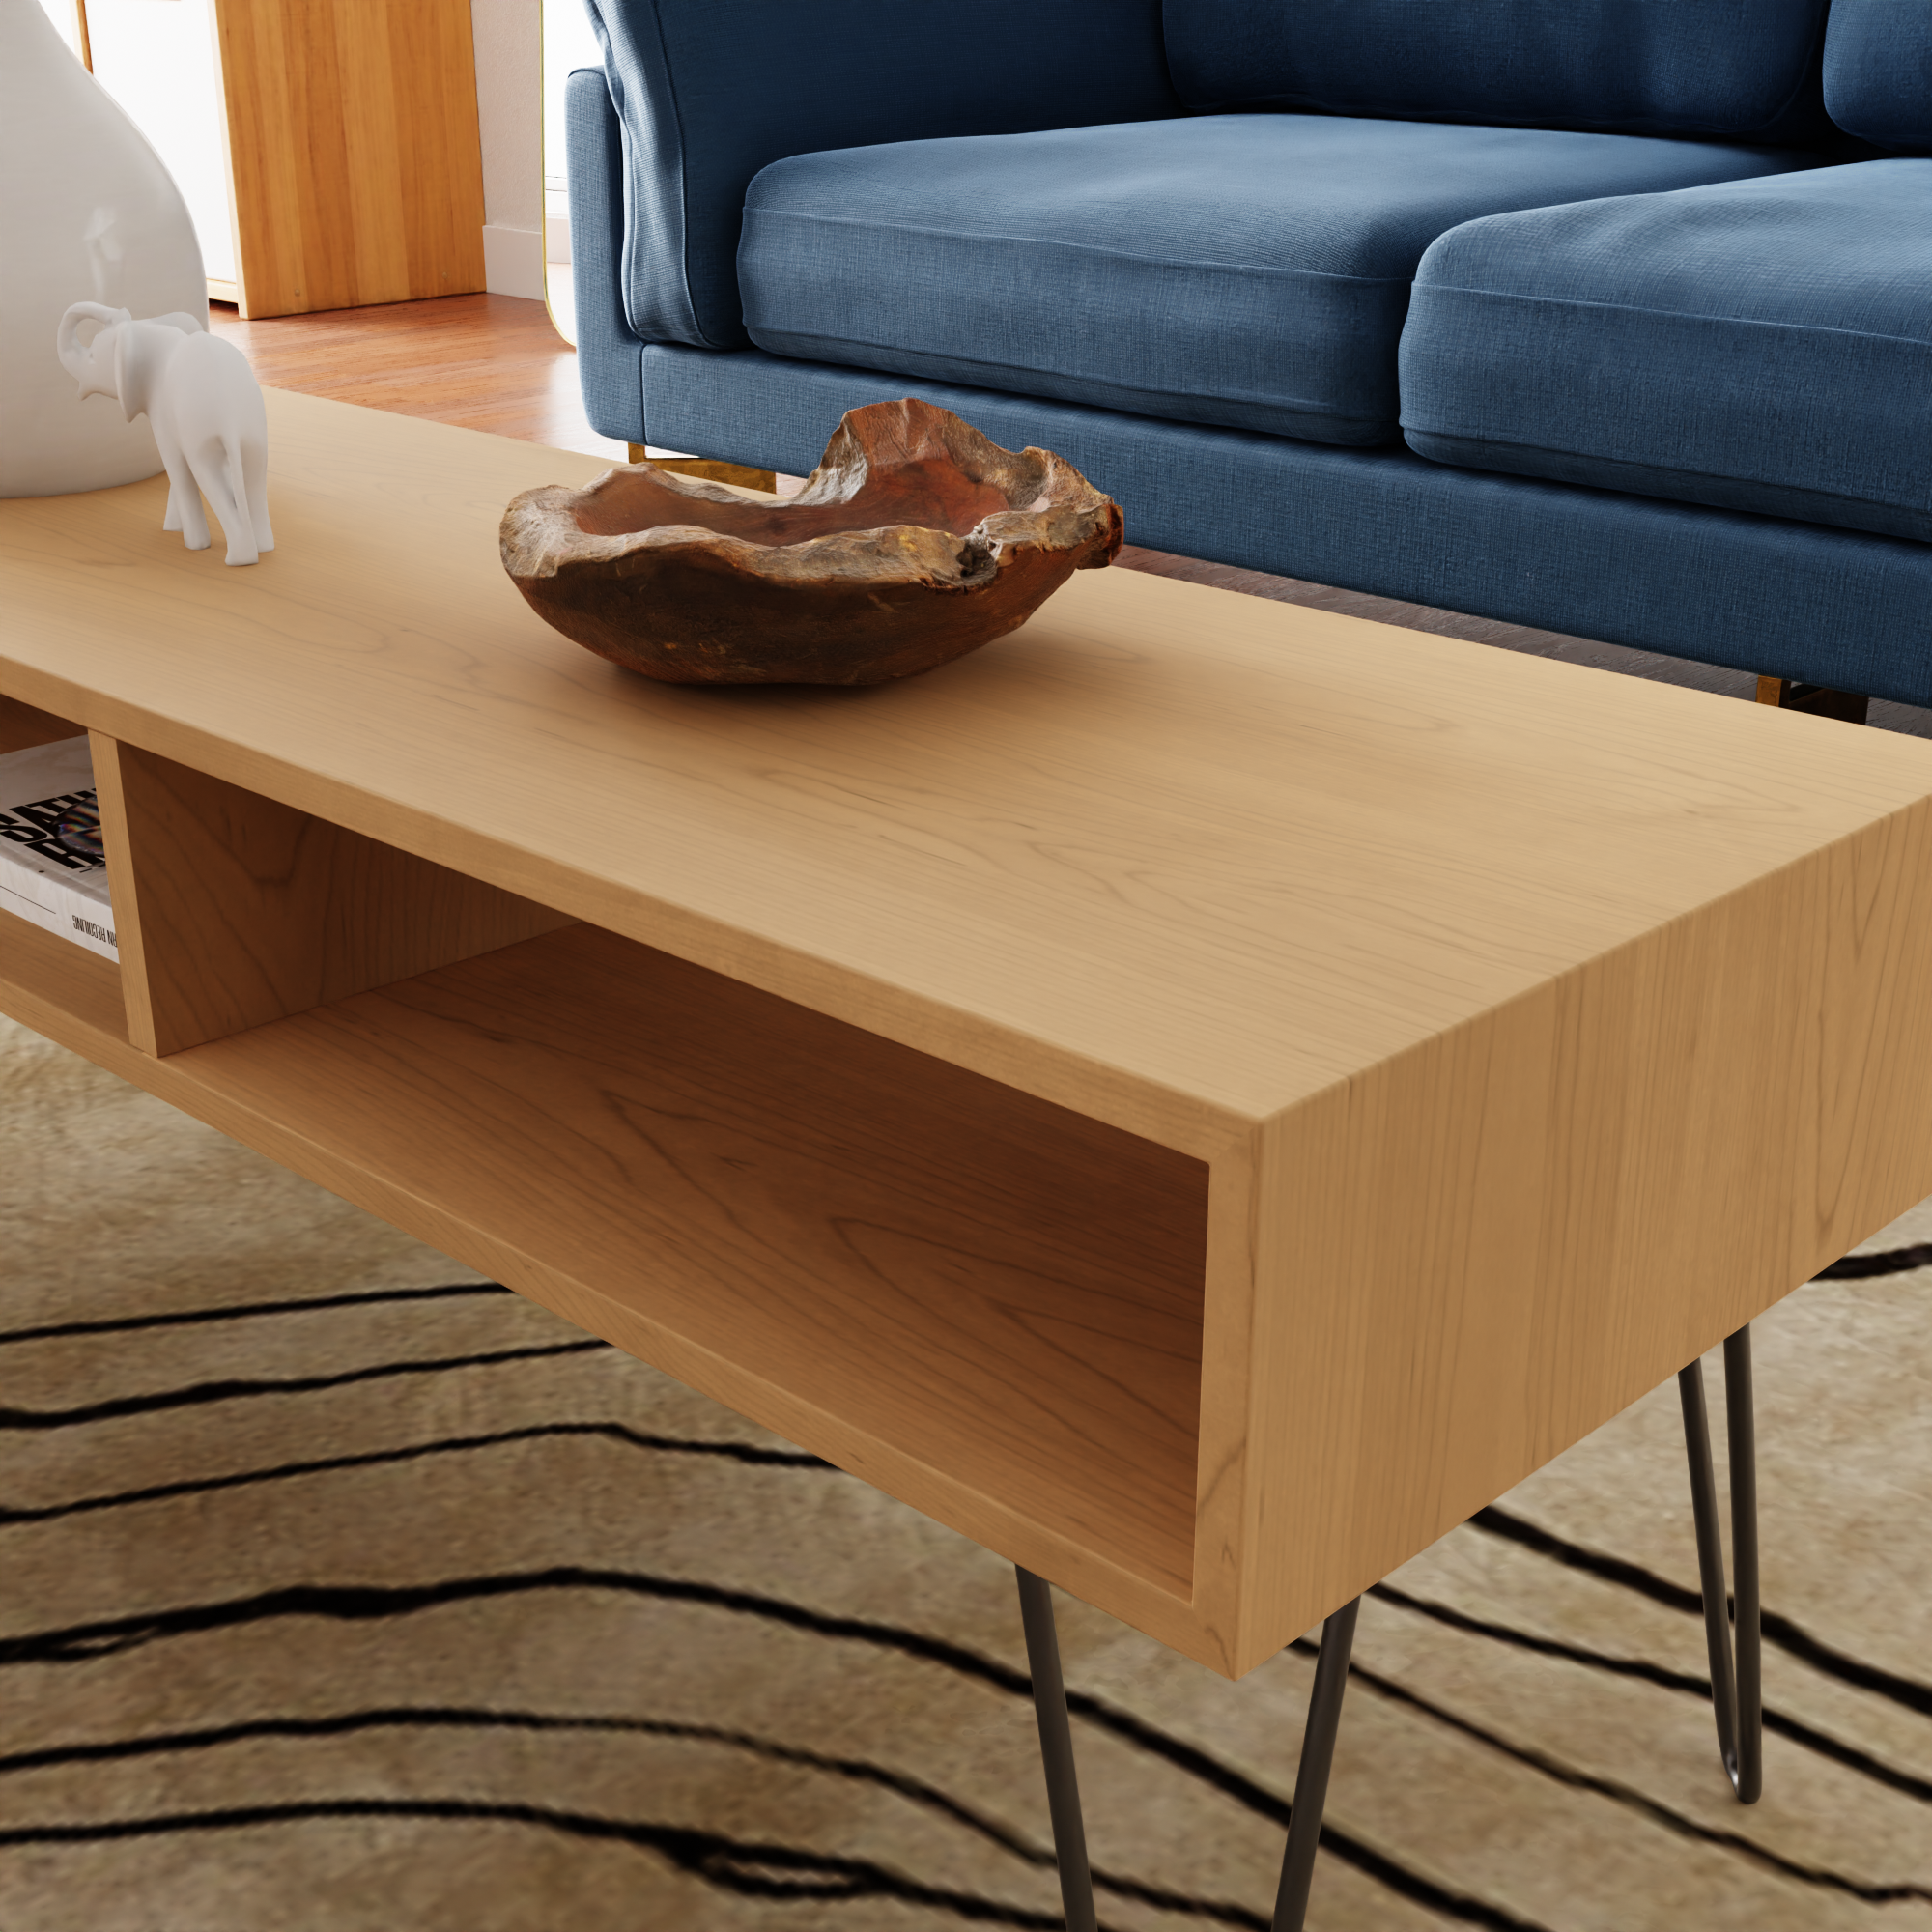 Maple Coffee Table, Mid-Century Modern Style - Krøvel Furniture Co. Handmade in Maine